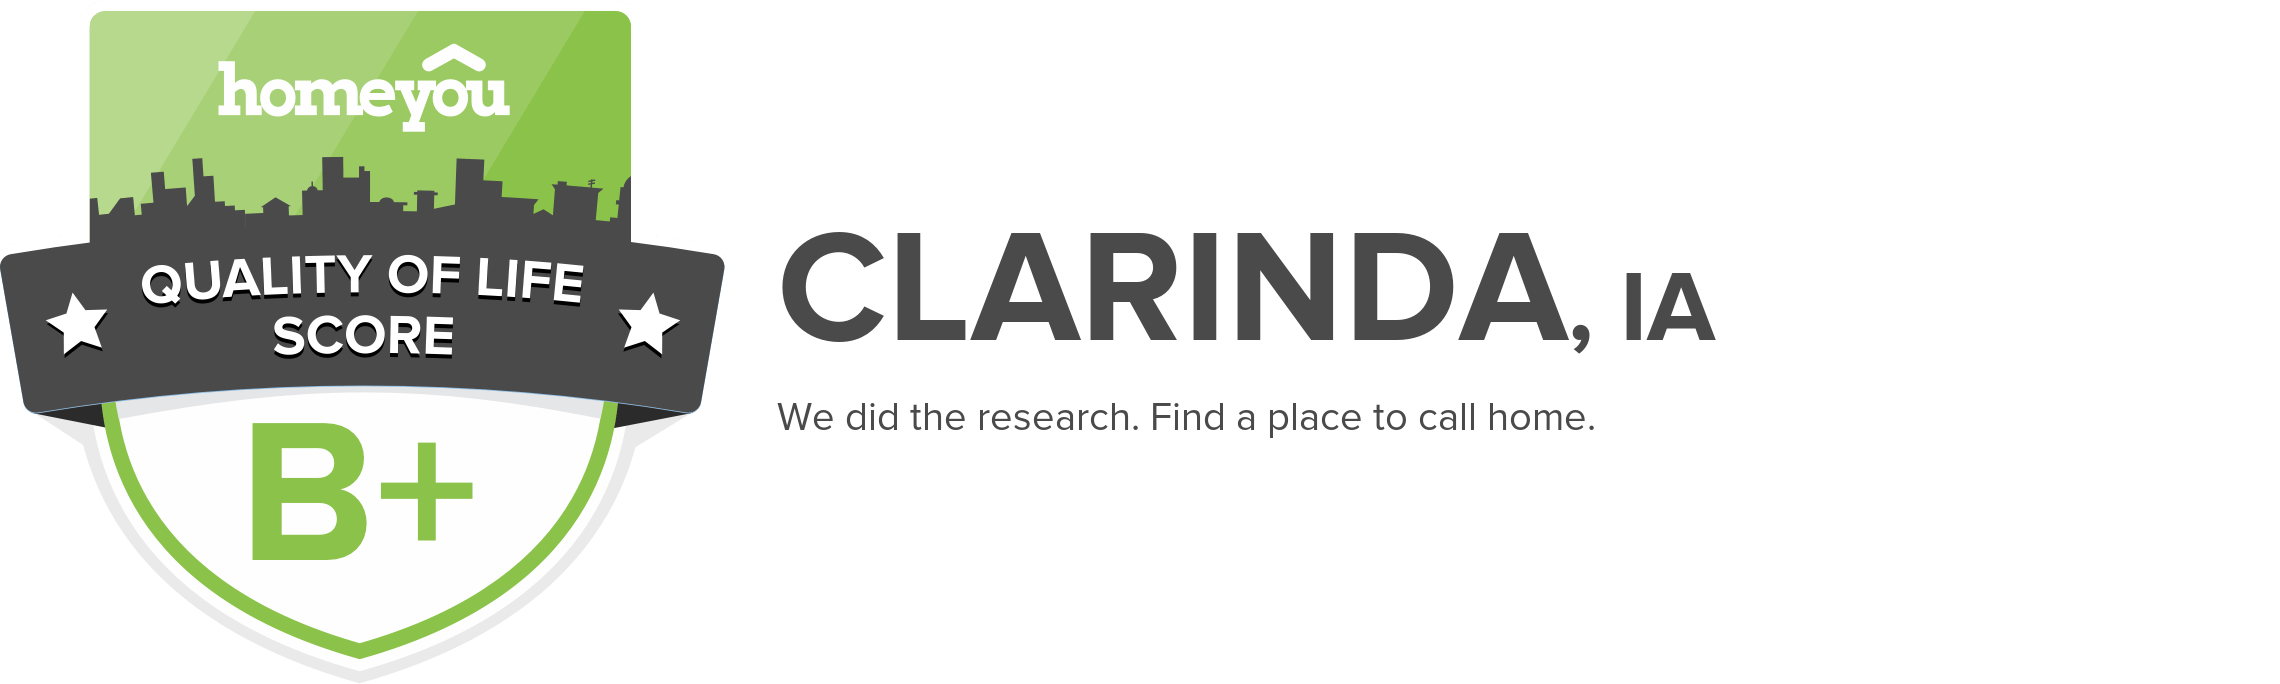 Clarinda, IA